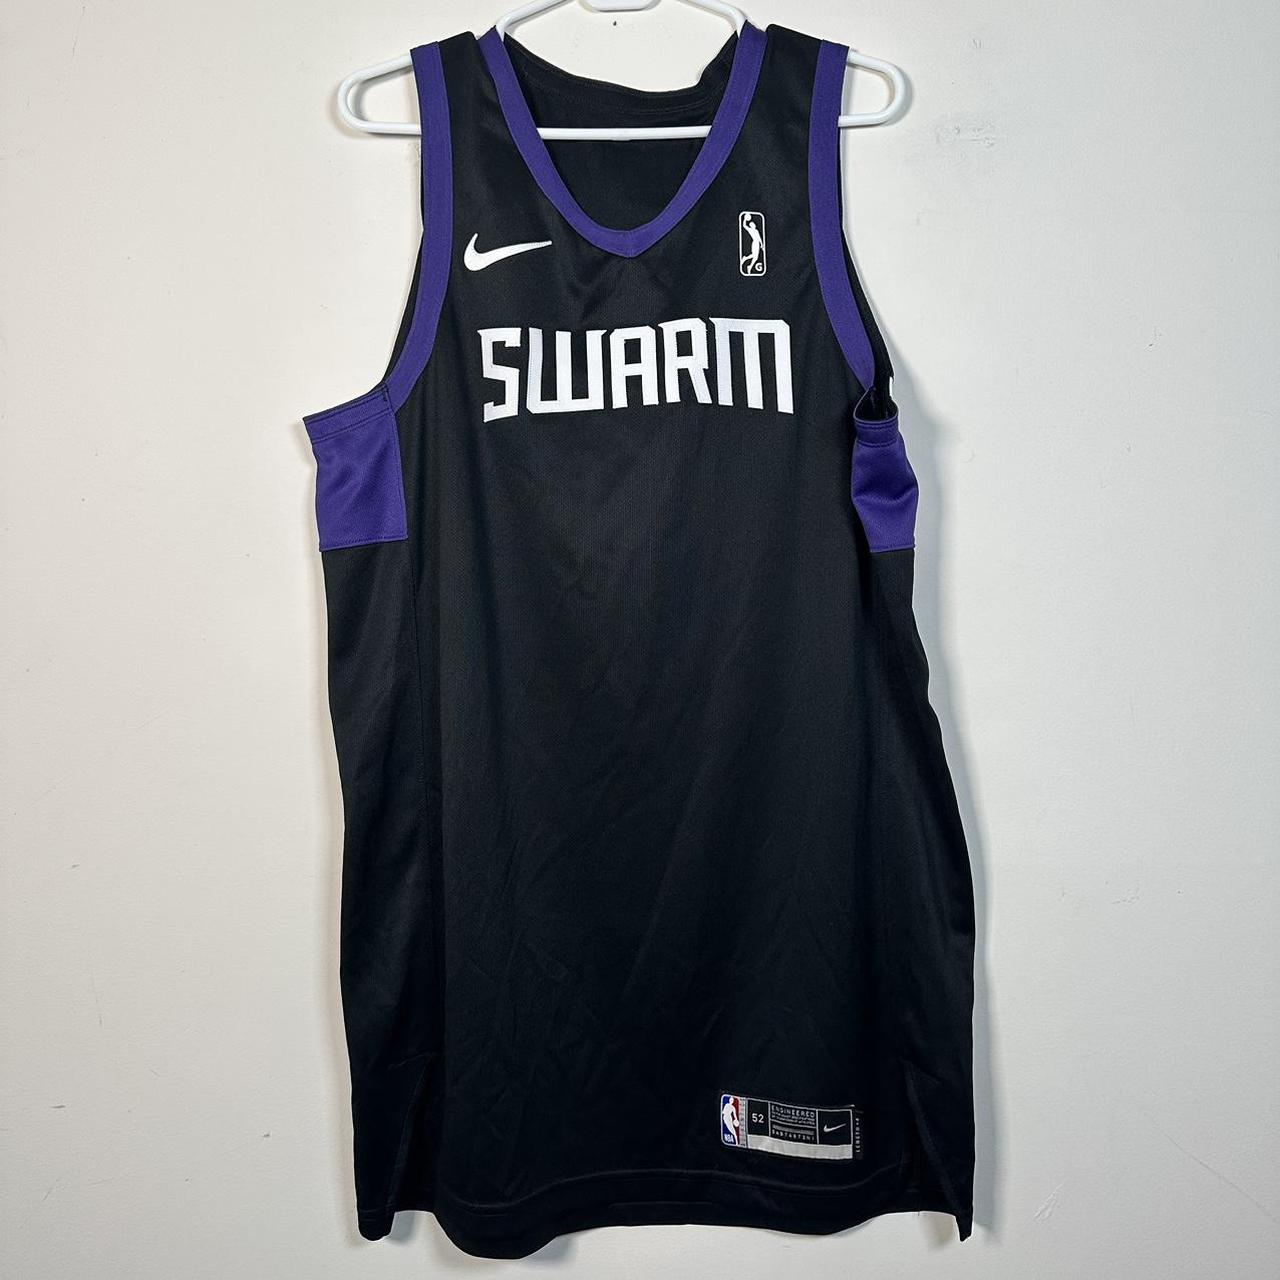 Greensboro Swarm NBA Authentic G-League Team Issued Nike